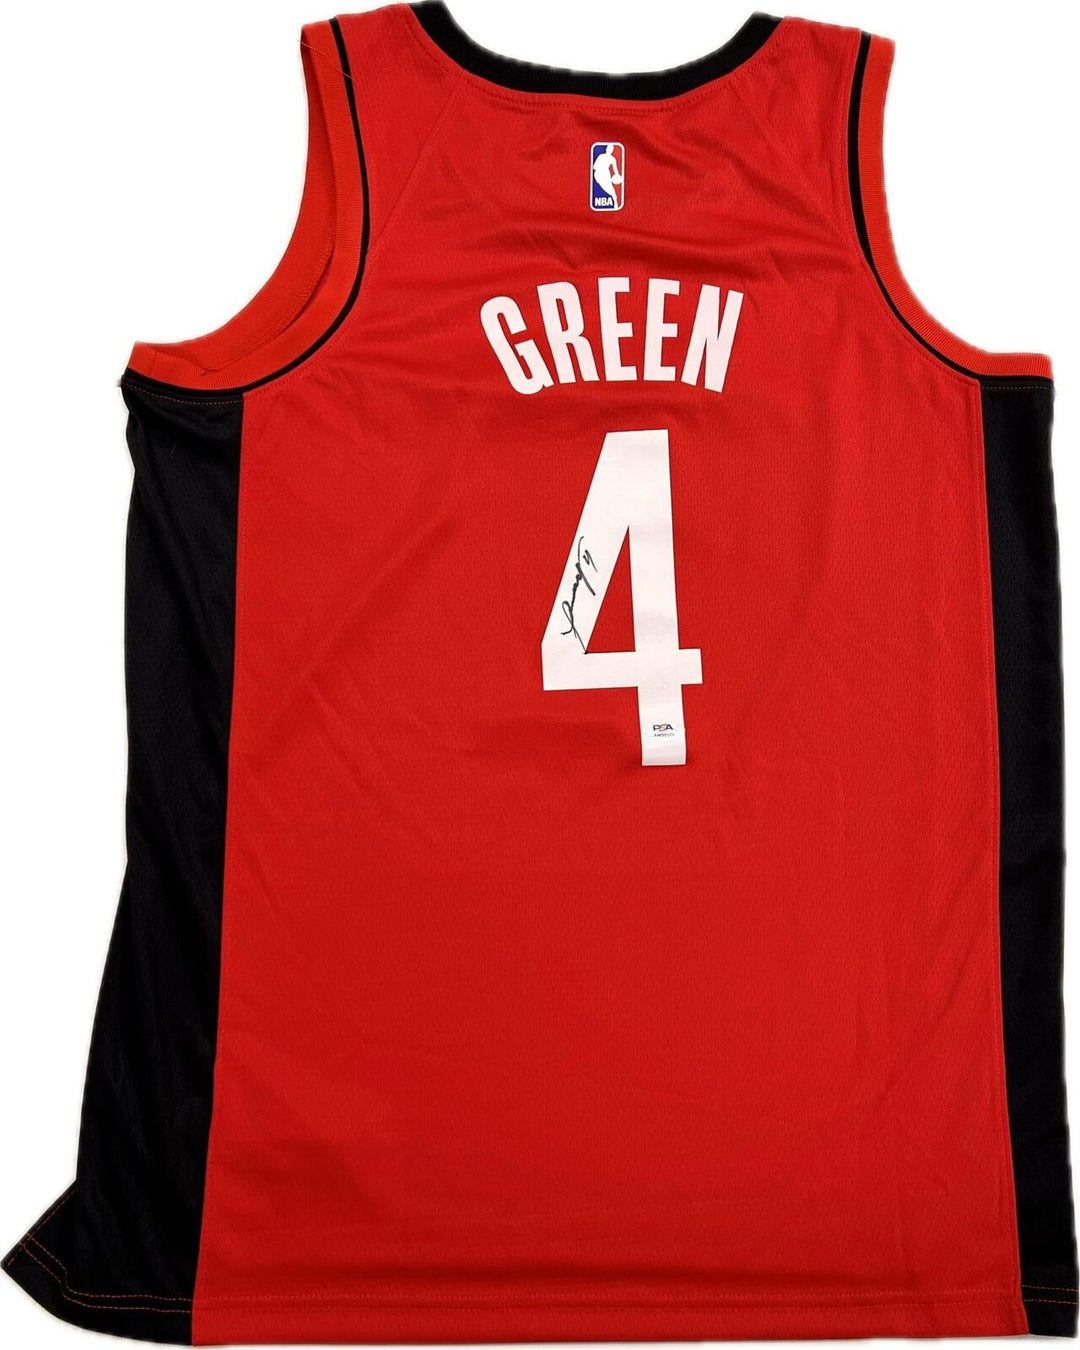 Jalen Green signed jersey PSA/DNA Houston Rockets Autographed Image 1